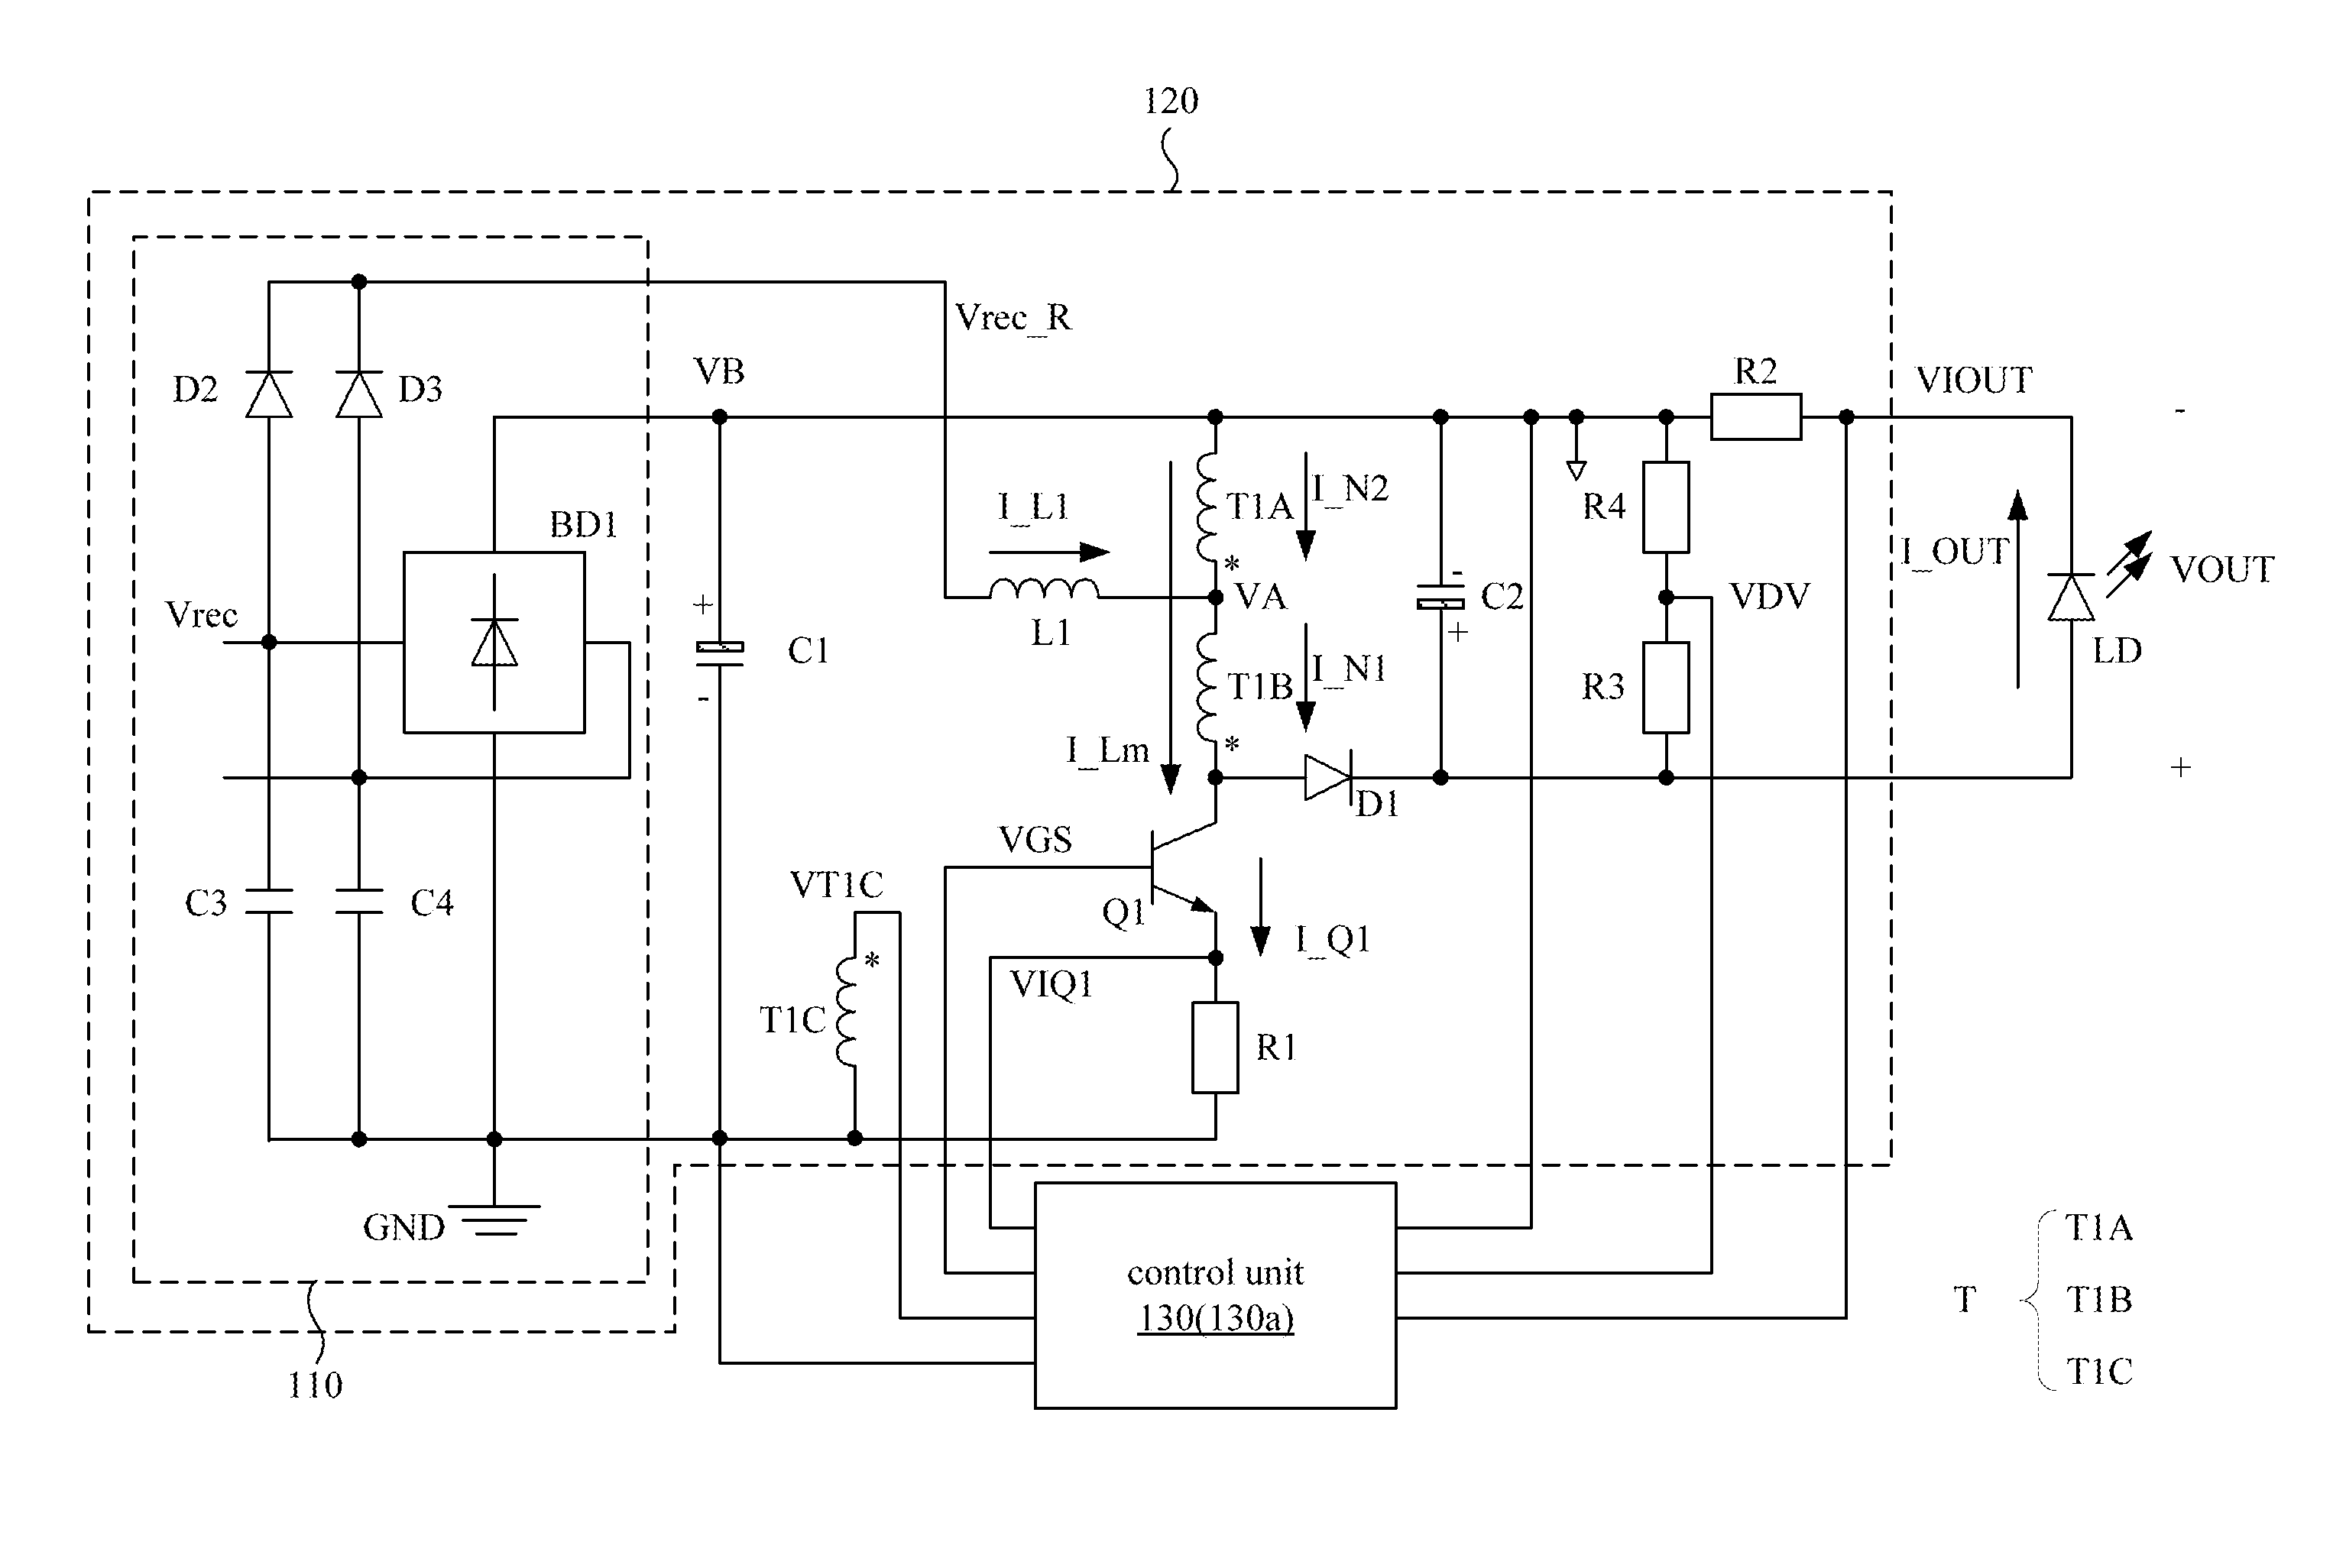 Voltage conversion device